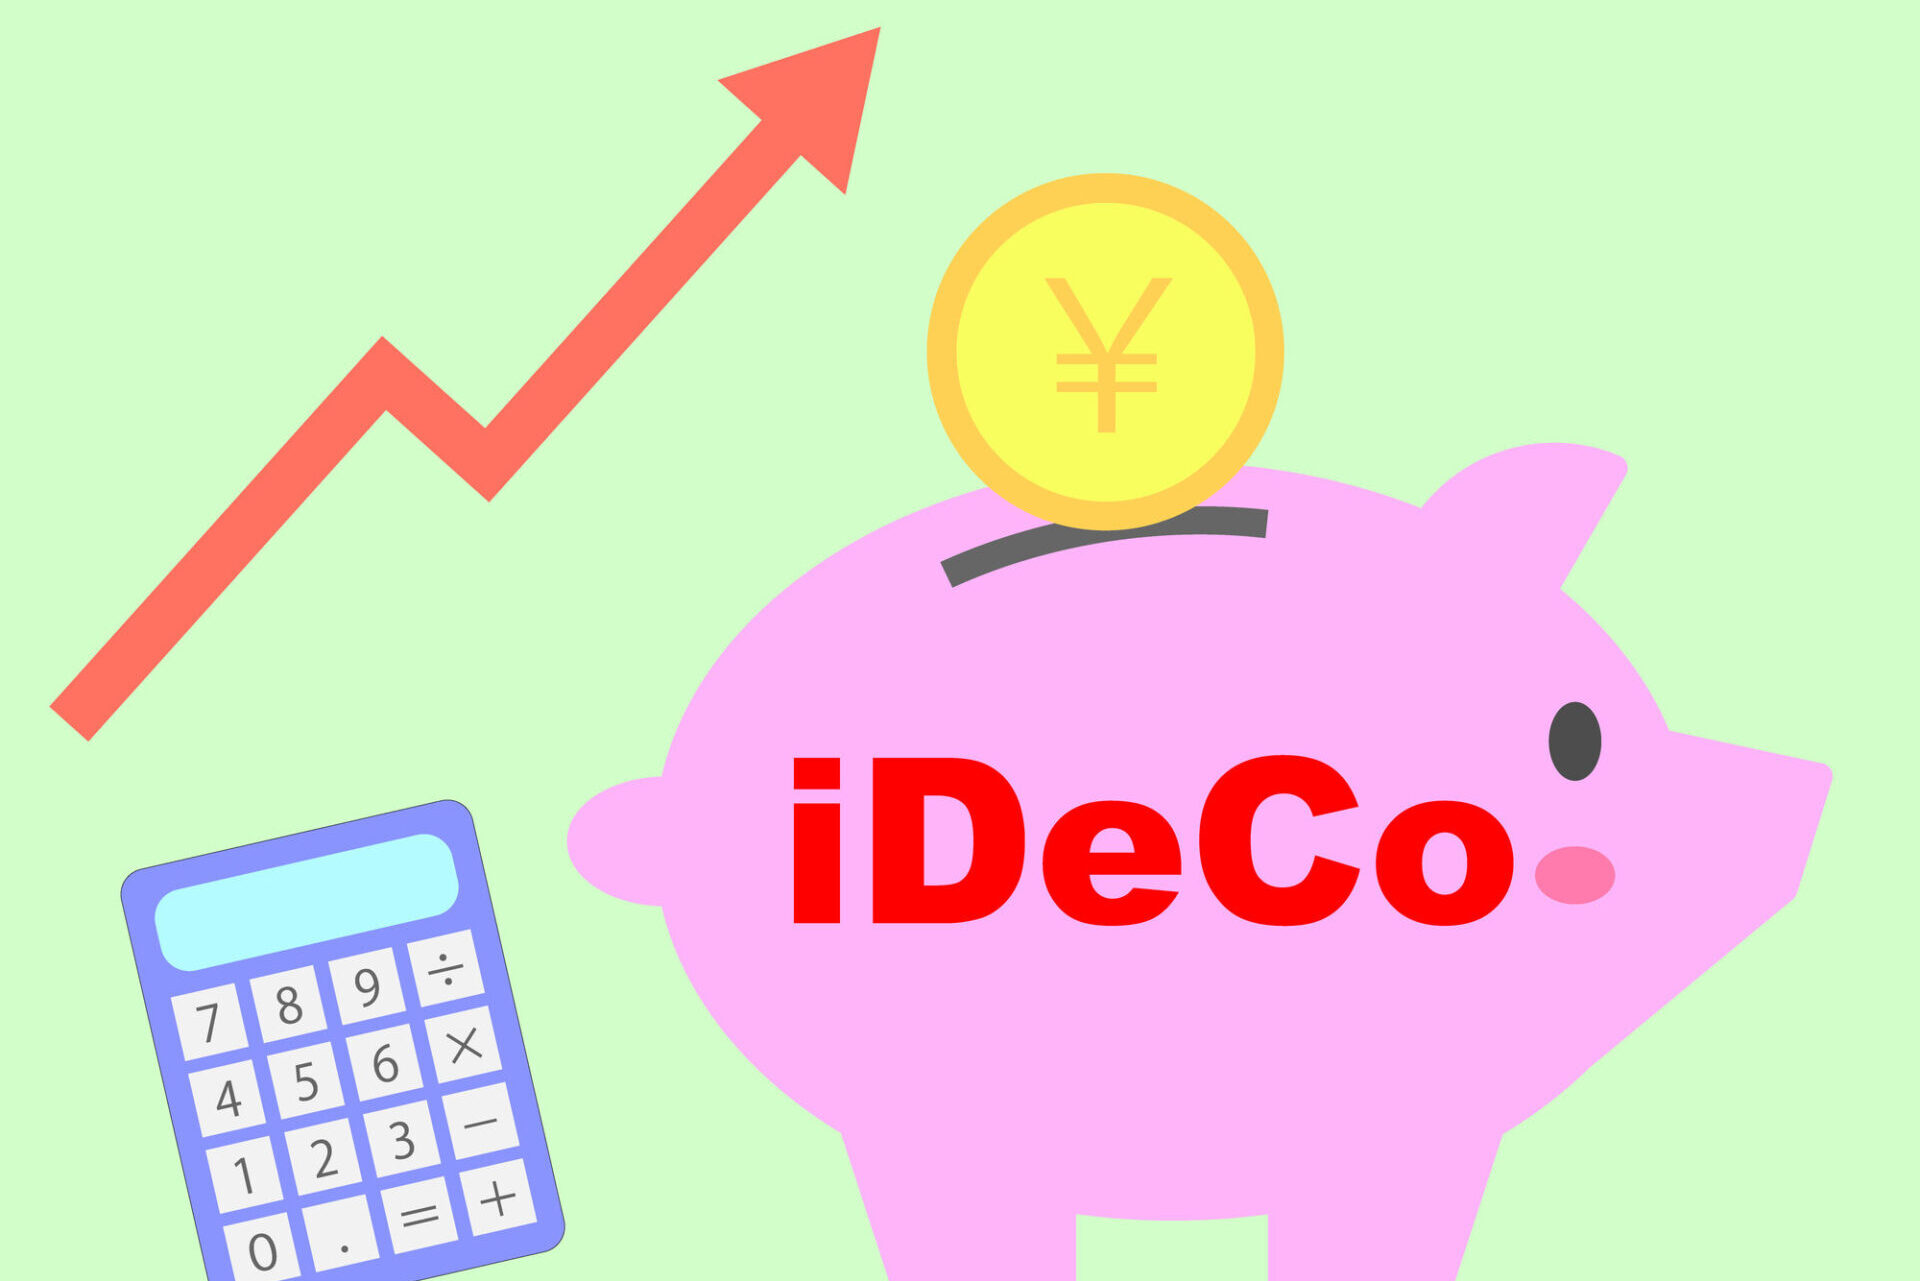 iDeCoは年末調整で税金が戻る？手続きや必要書類などを解説